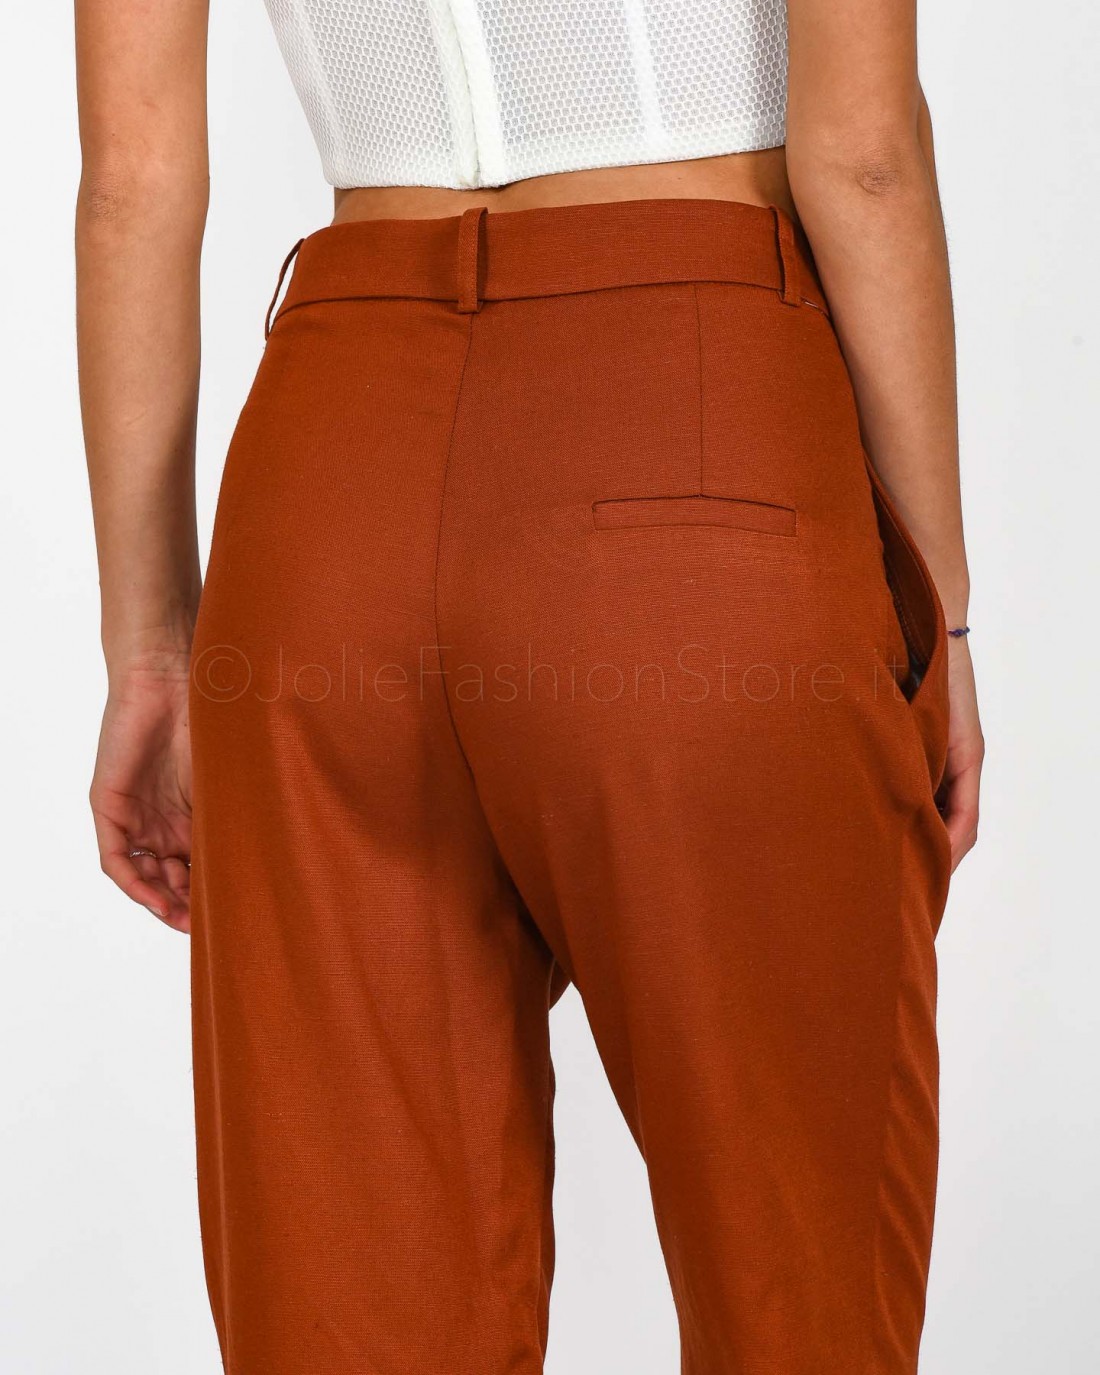 Dixie Pants in dark denim organic cotton and hemp – Arnhem Clothing